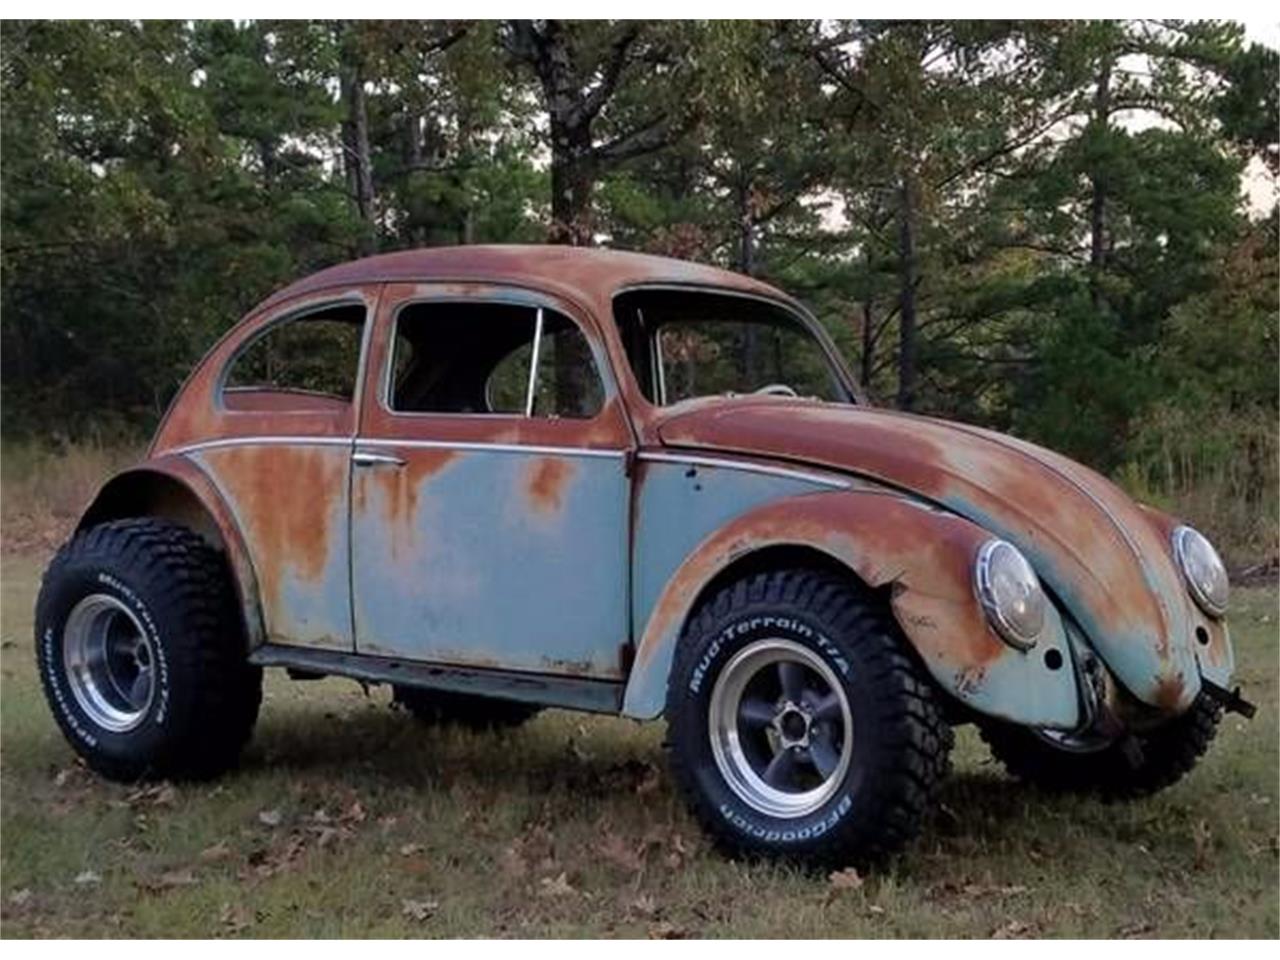 For Sale: 1961 Volkswagen Beetle in Cadillac, Michigan.